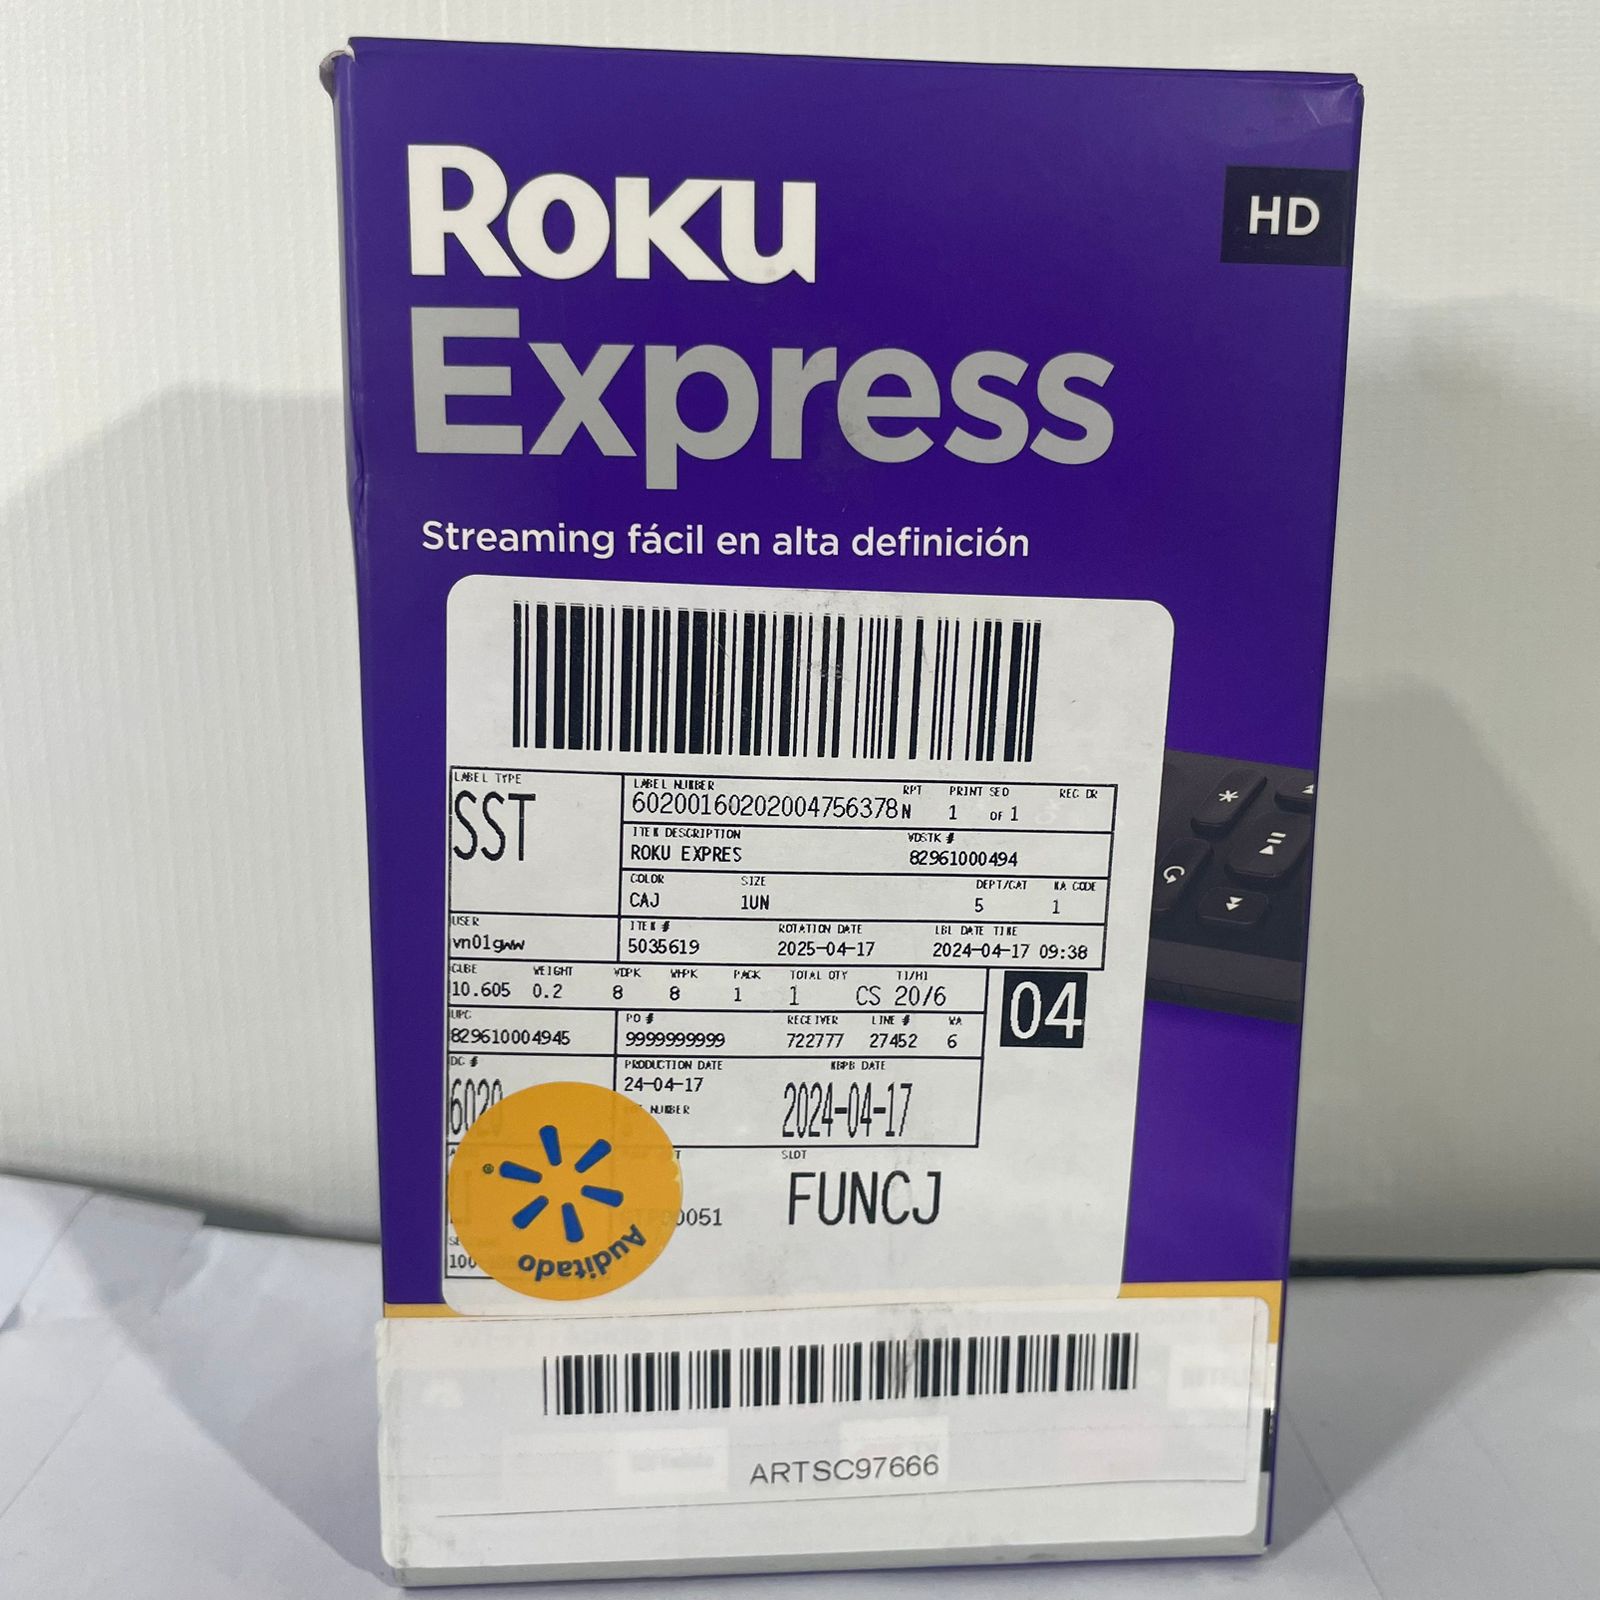 Express Roku Con Control Remoto 4K Negro [Openbox]